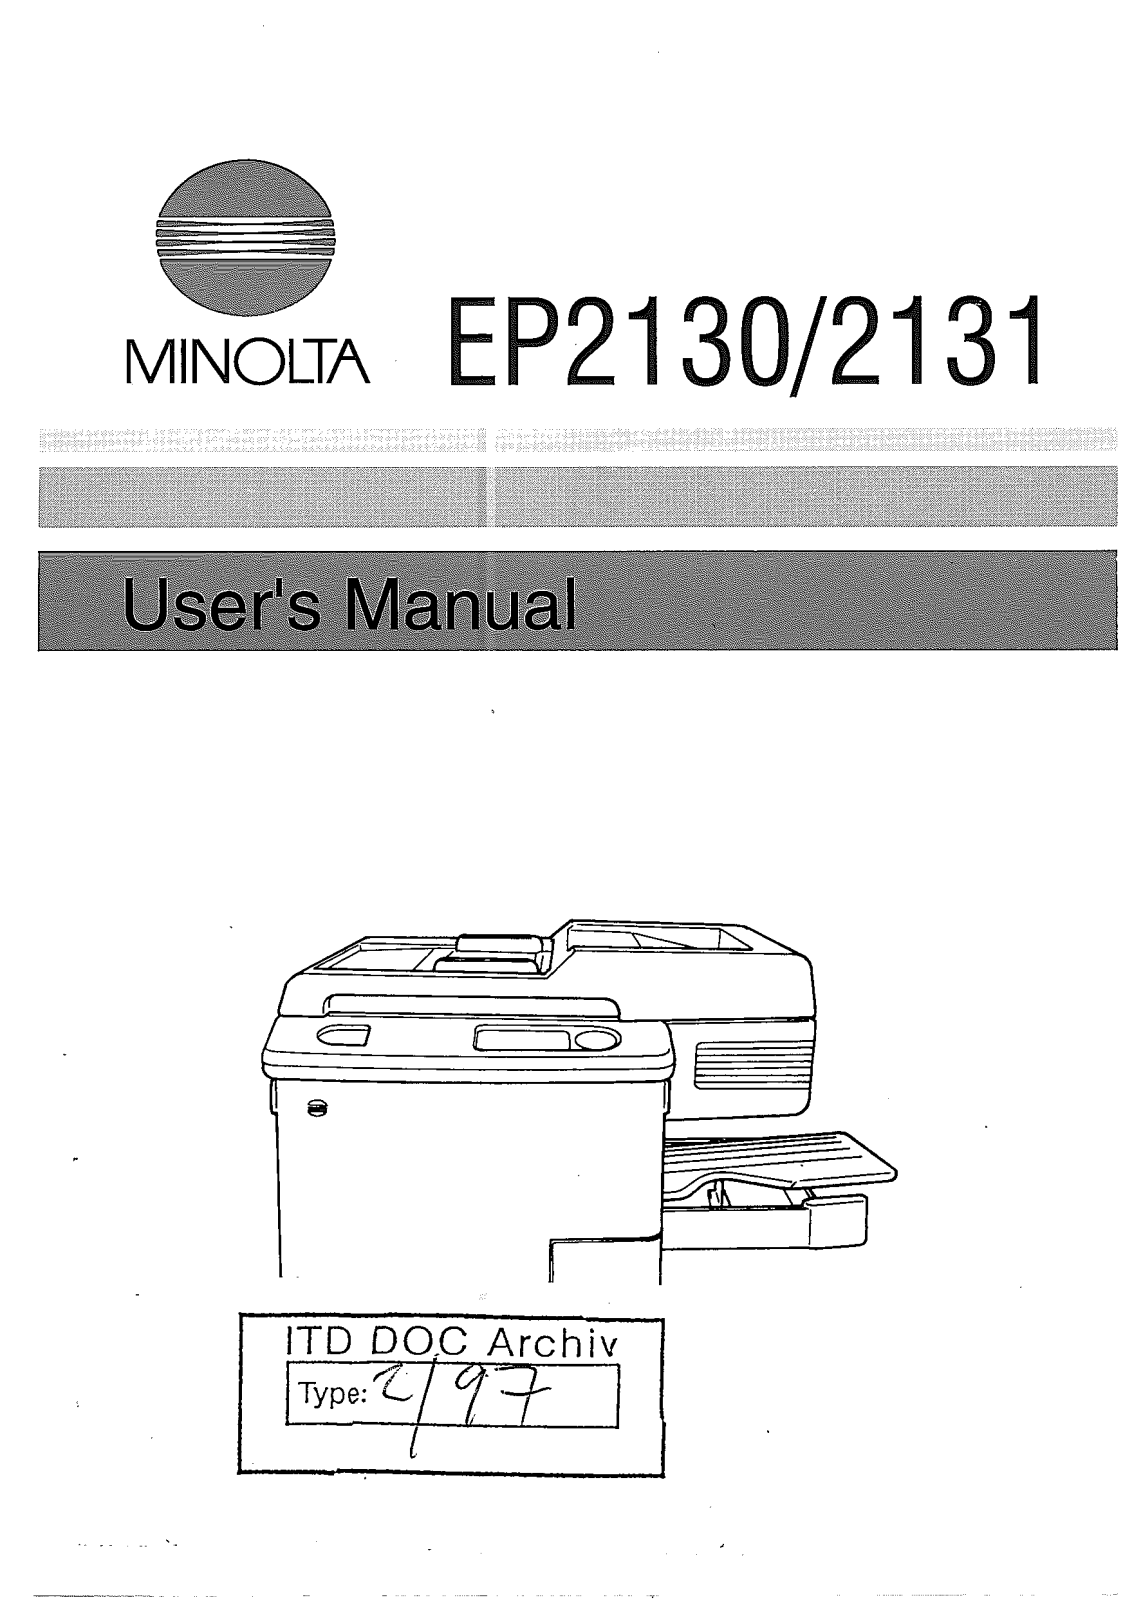 Konica Minolta EP2130, EP2131 Manual